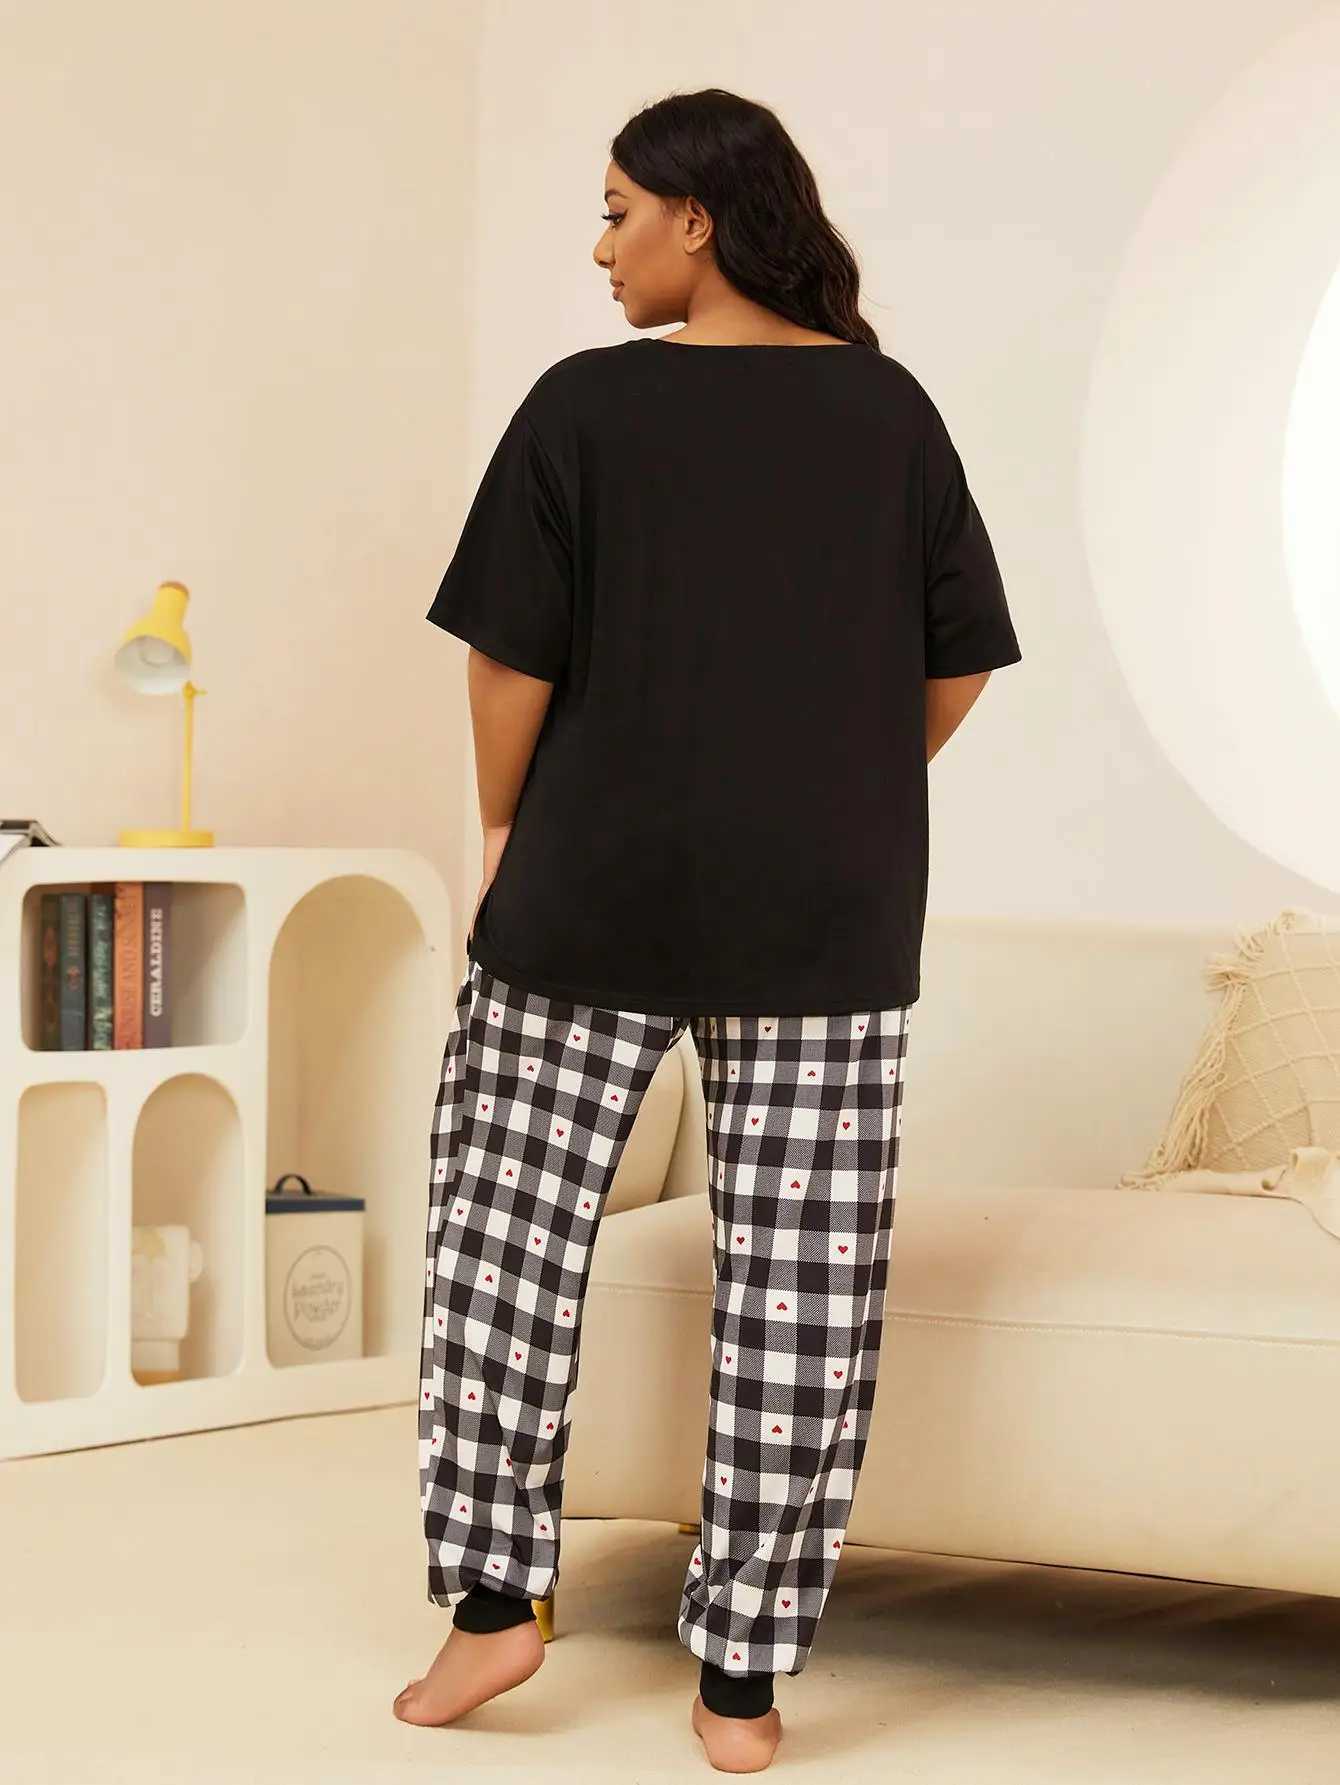 Women's Sleep Lounge Plus Size Womens Pajamas Set Scew Neck Plaid Love Print Summer Short Sleeves Sleepwear Drawstring Long Btoom Nightwear Clothes d240419